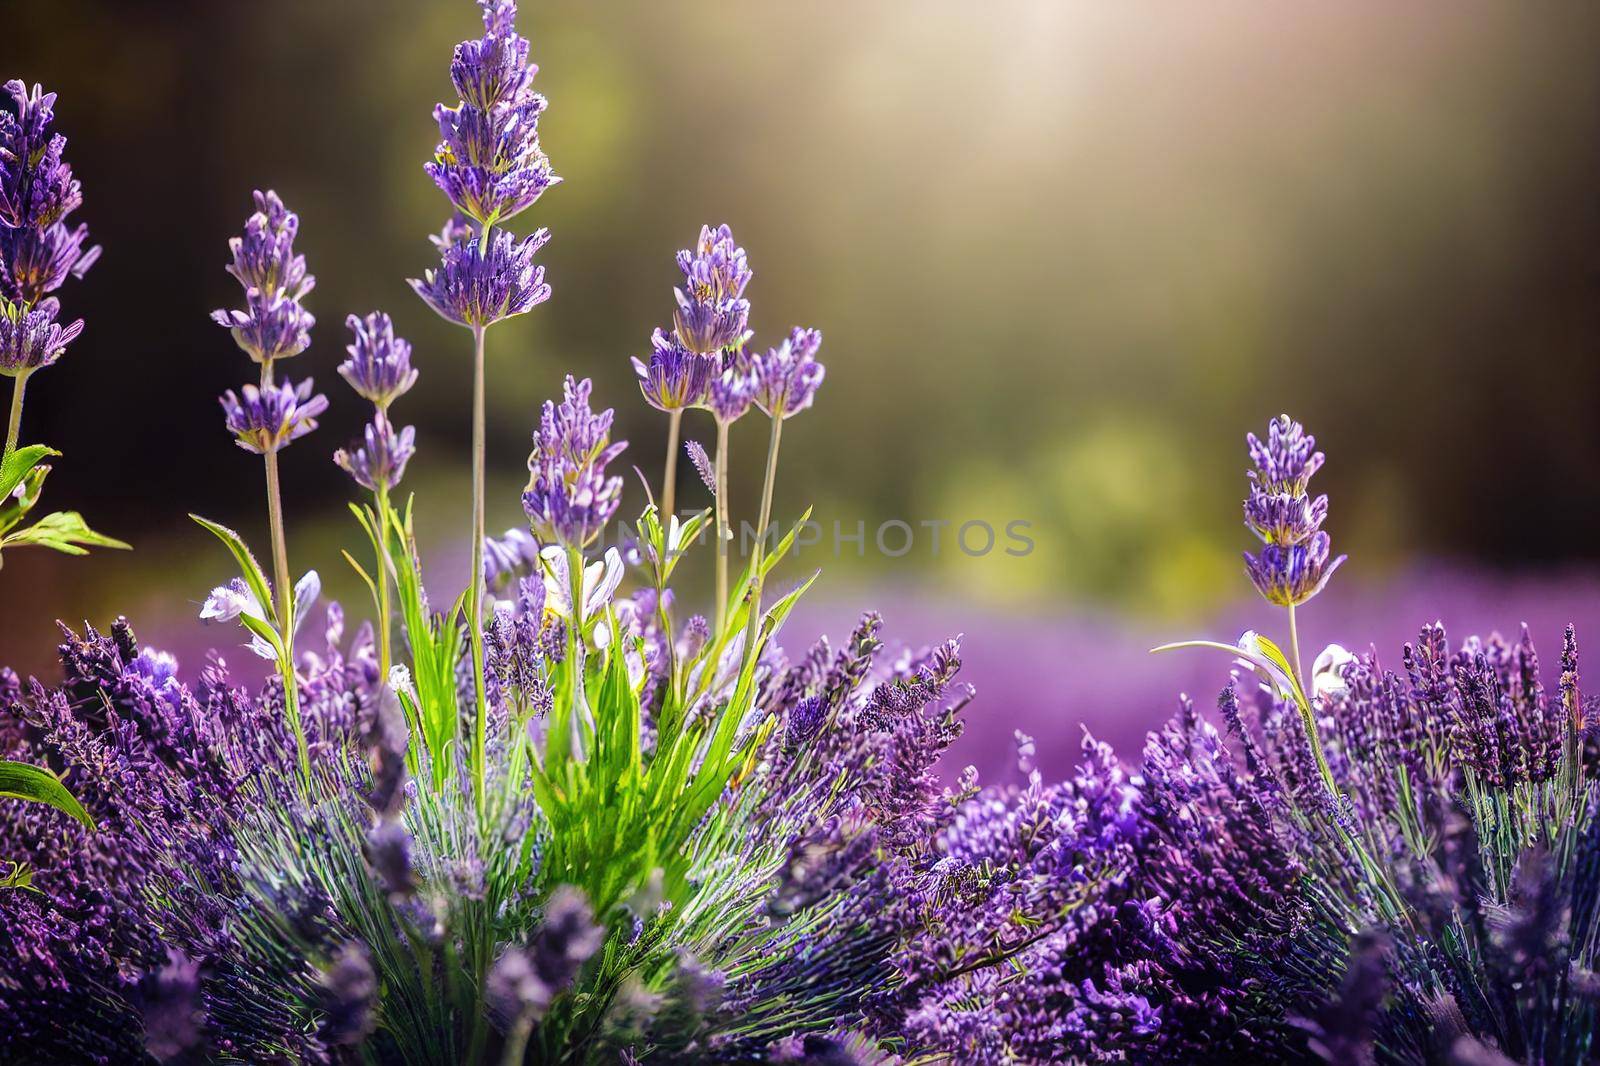 Lavender garden, flower bed in bloom, soft focus, late by 2ragon